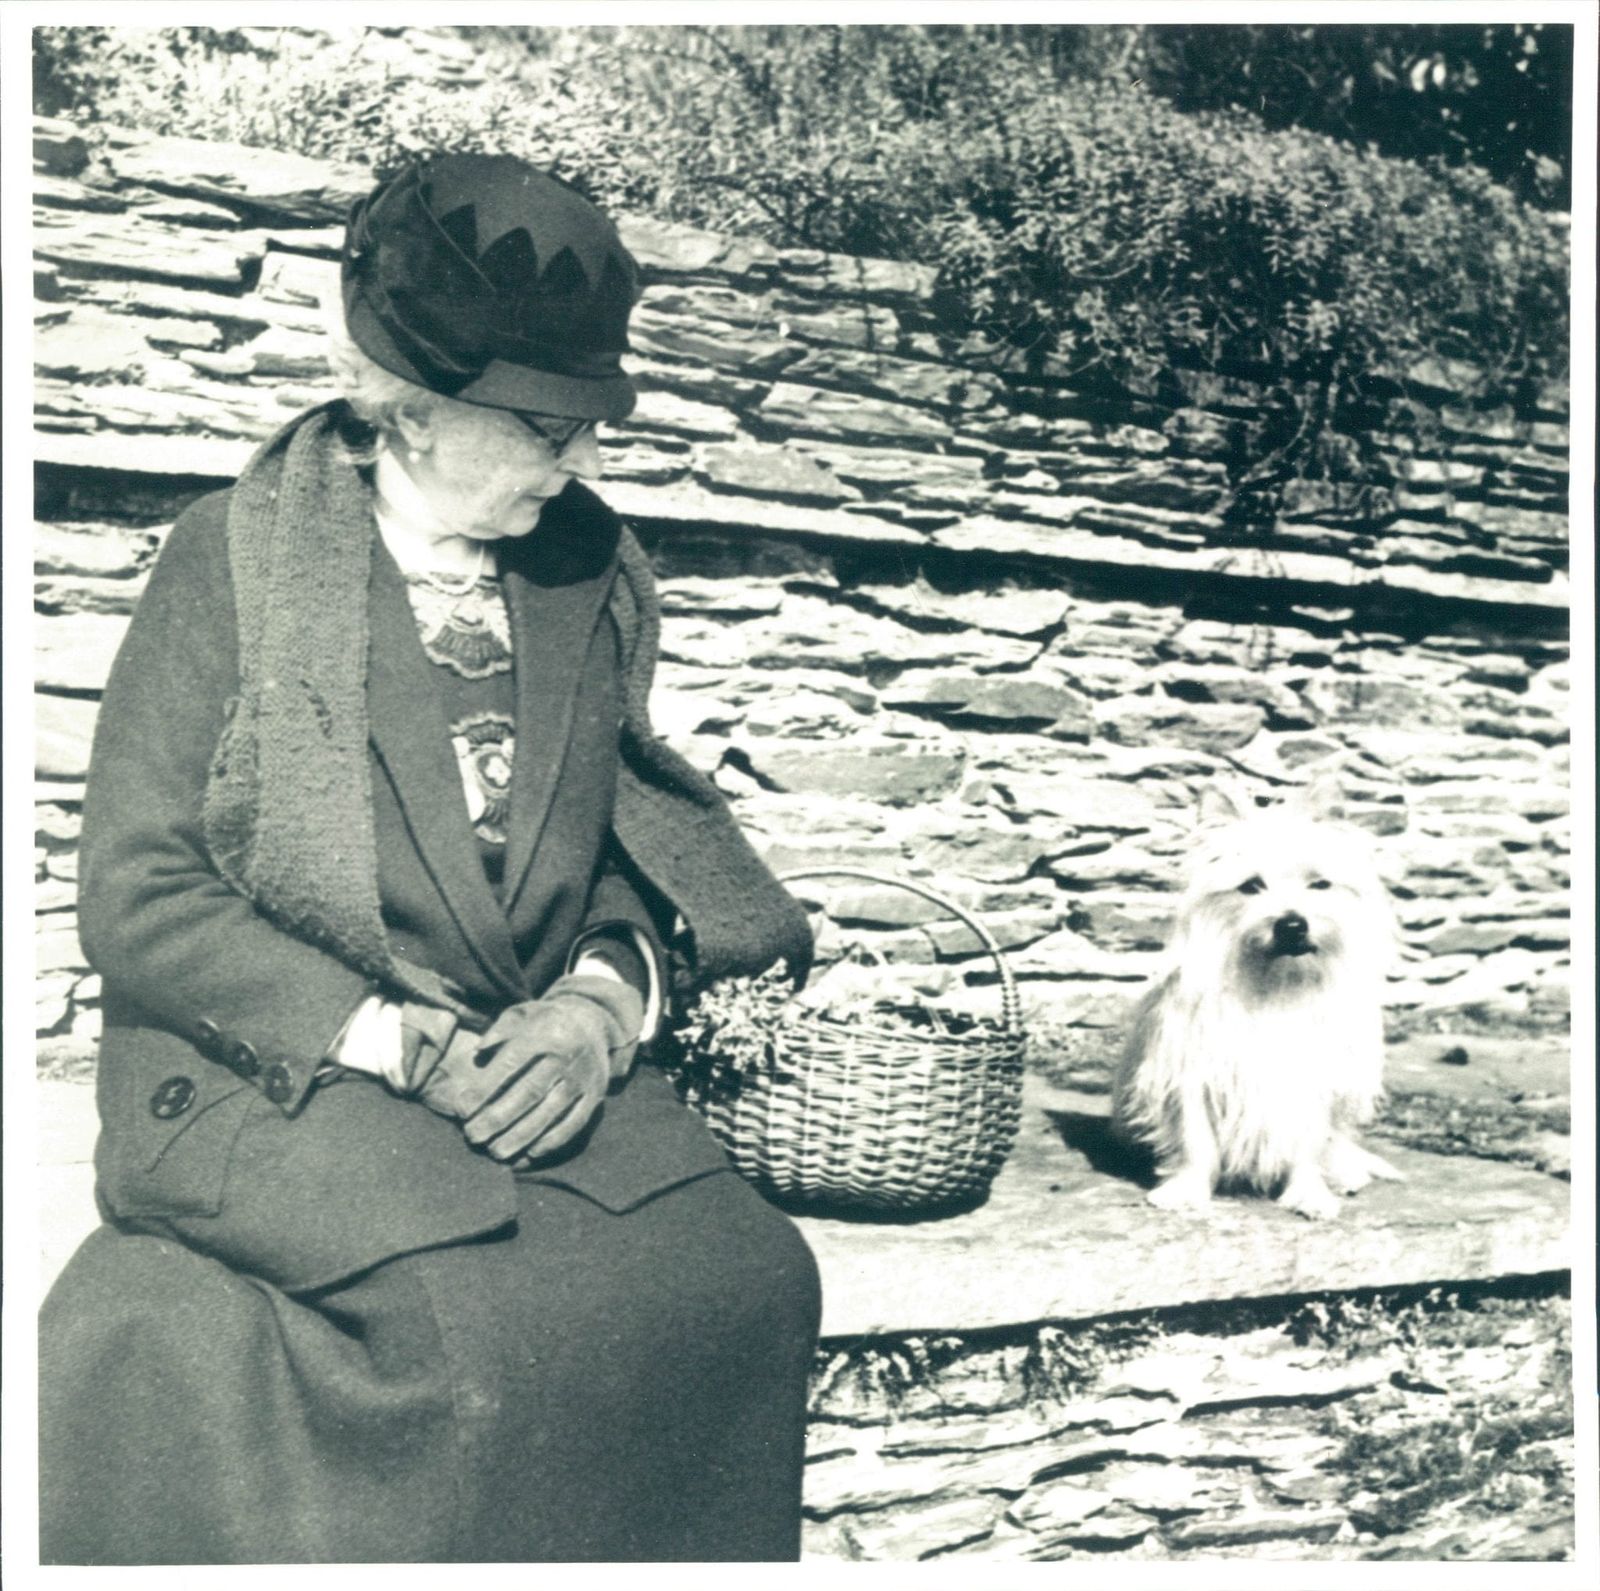 Mrs. Portman with her dog 1933